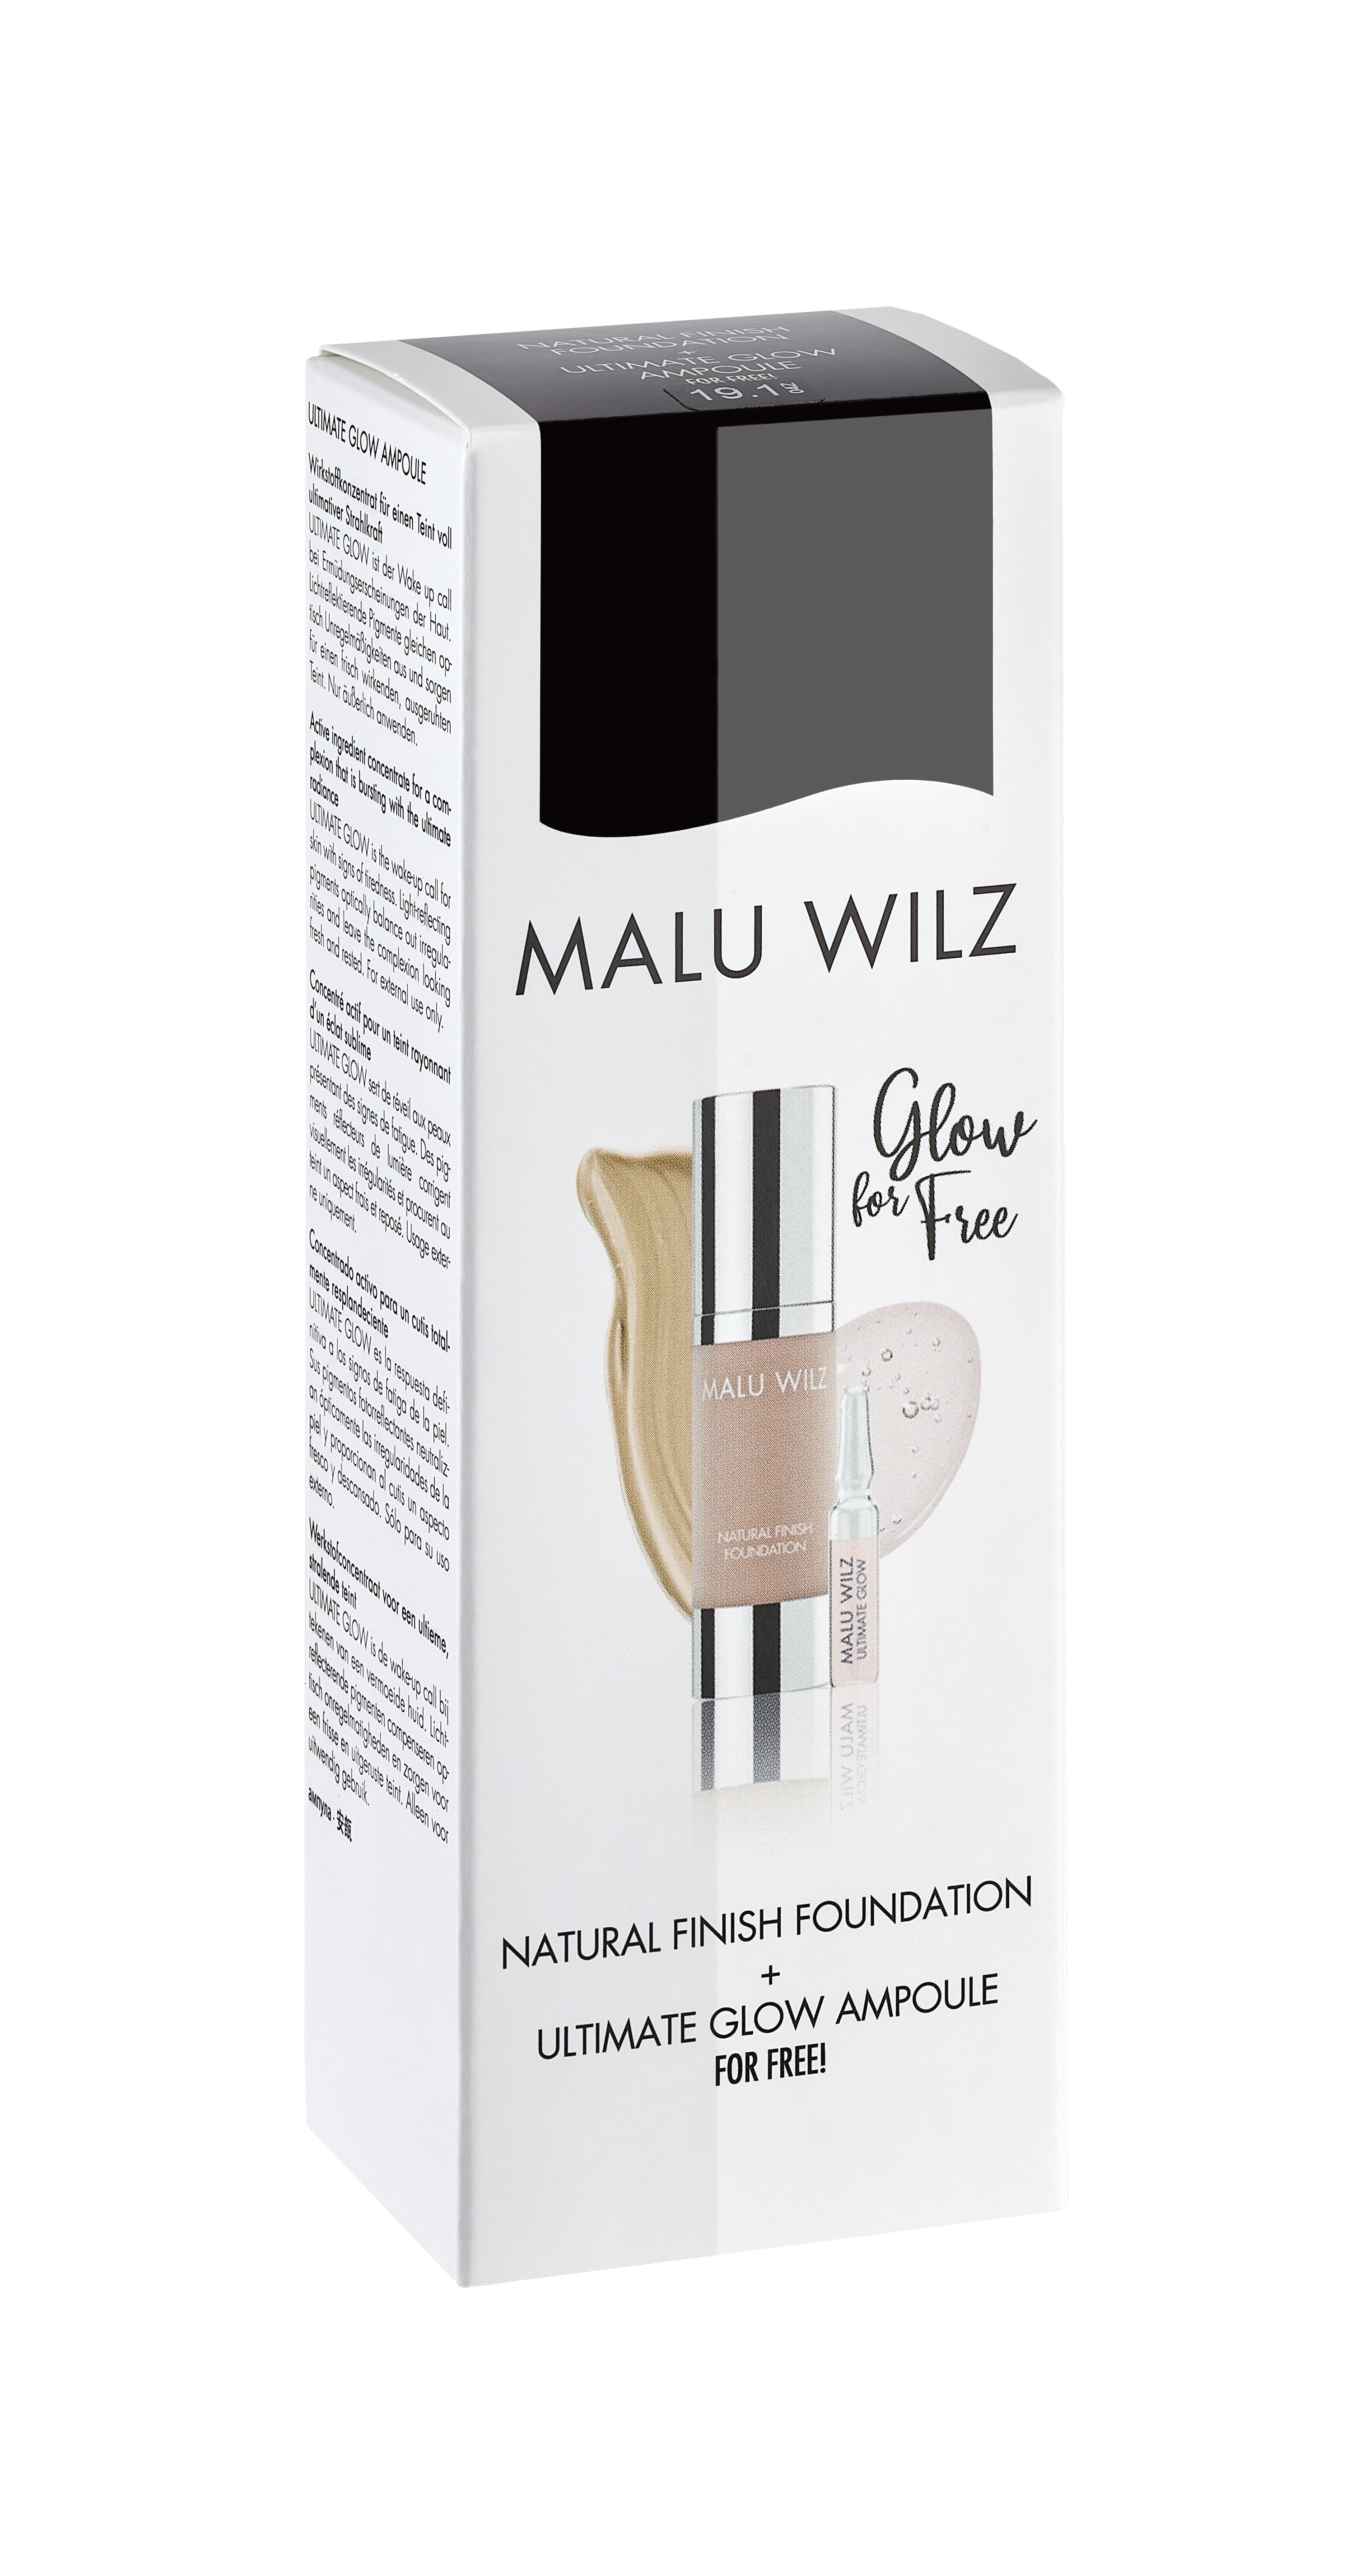 Malu Wilz Natural Finish Foundation 19 glow edition